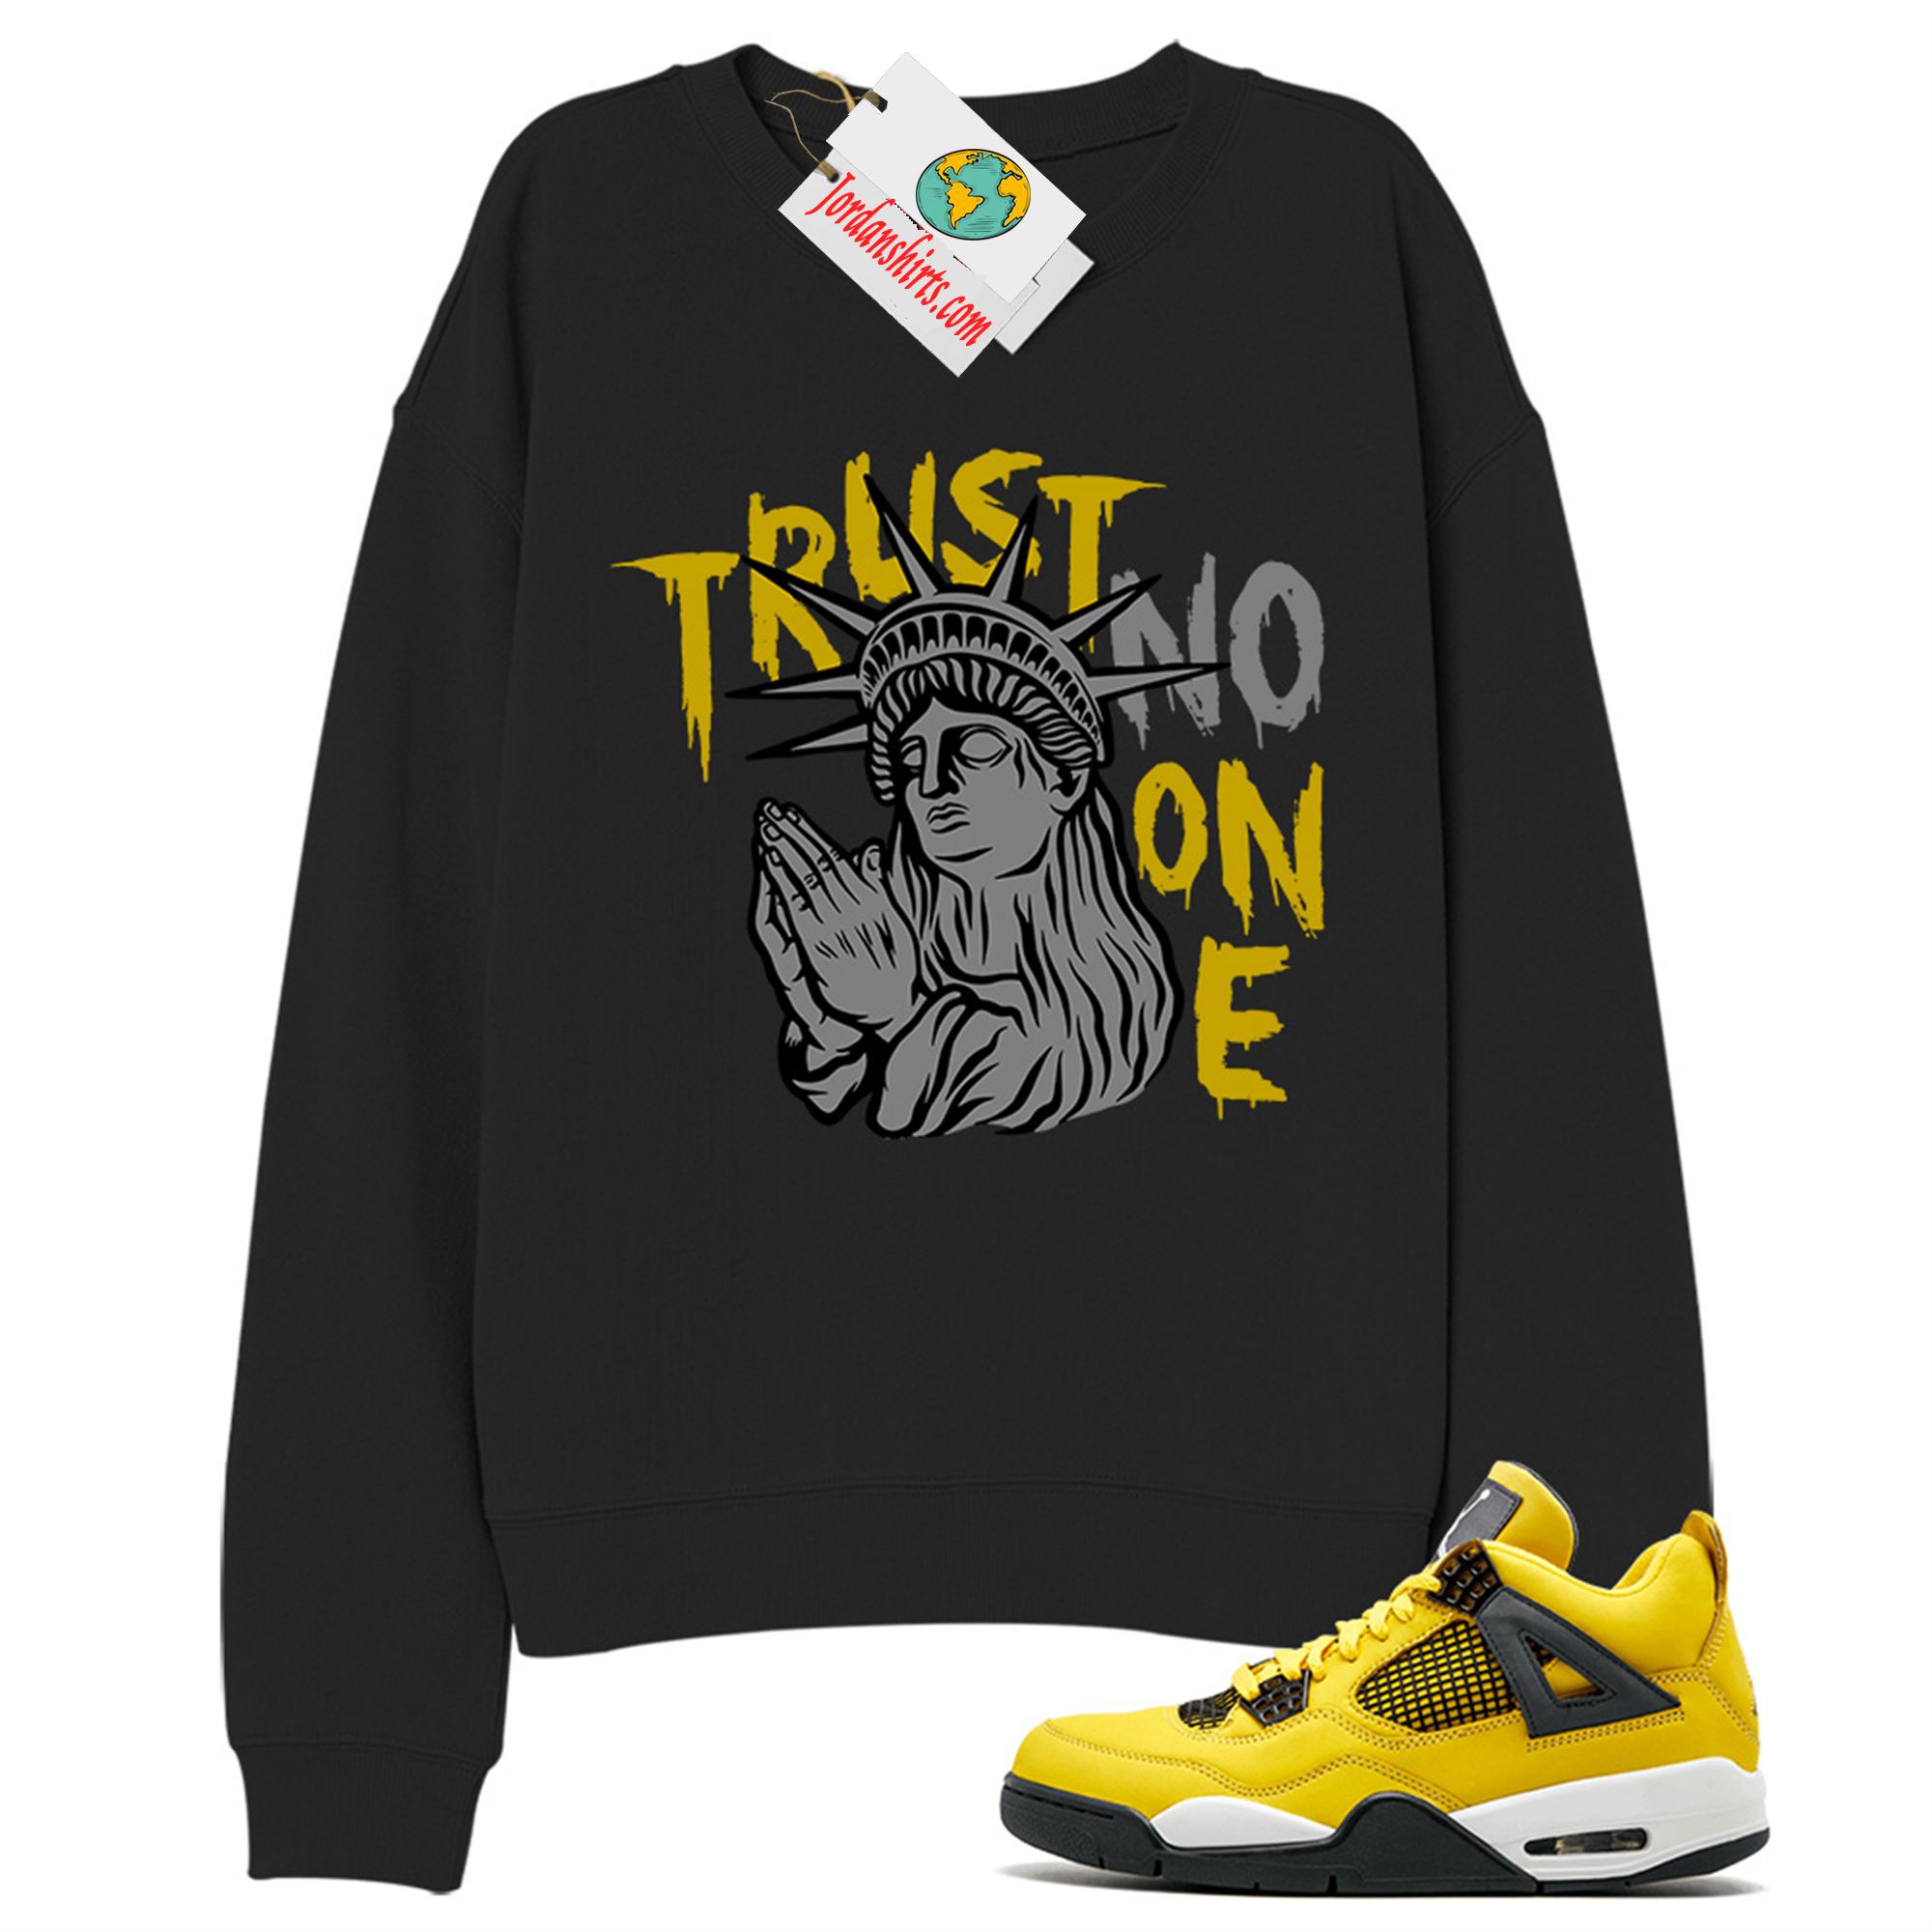 Jordan 4 Sweatshirt, Trust No One Statue Of Liberty Black Sweatshirt Air Jordan 4 Tour Yellowlightning 4s Full Size Up To 5xl